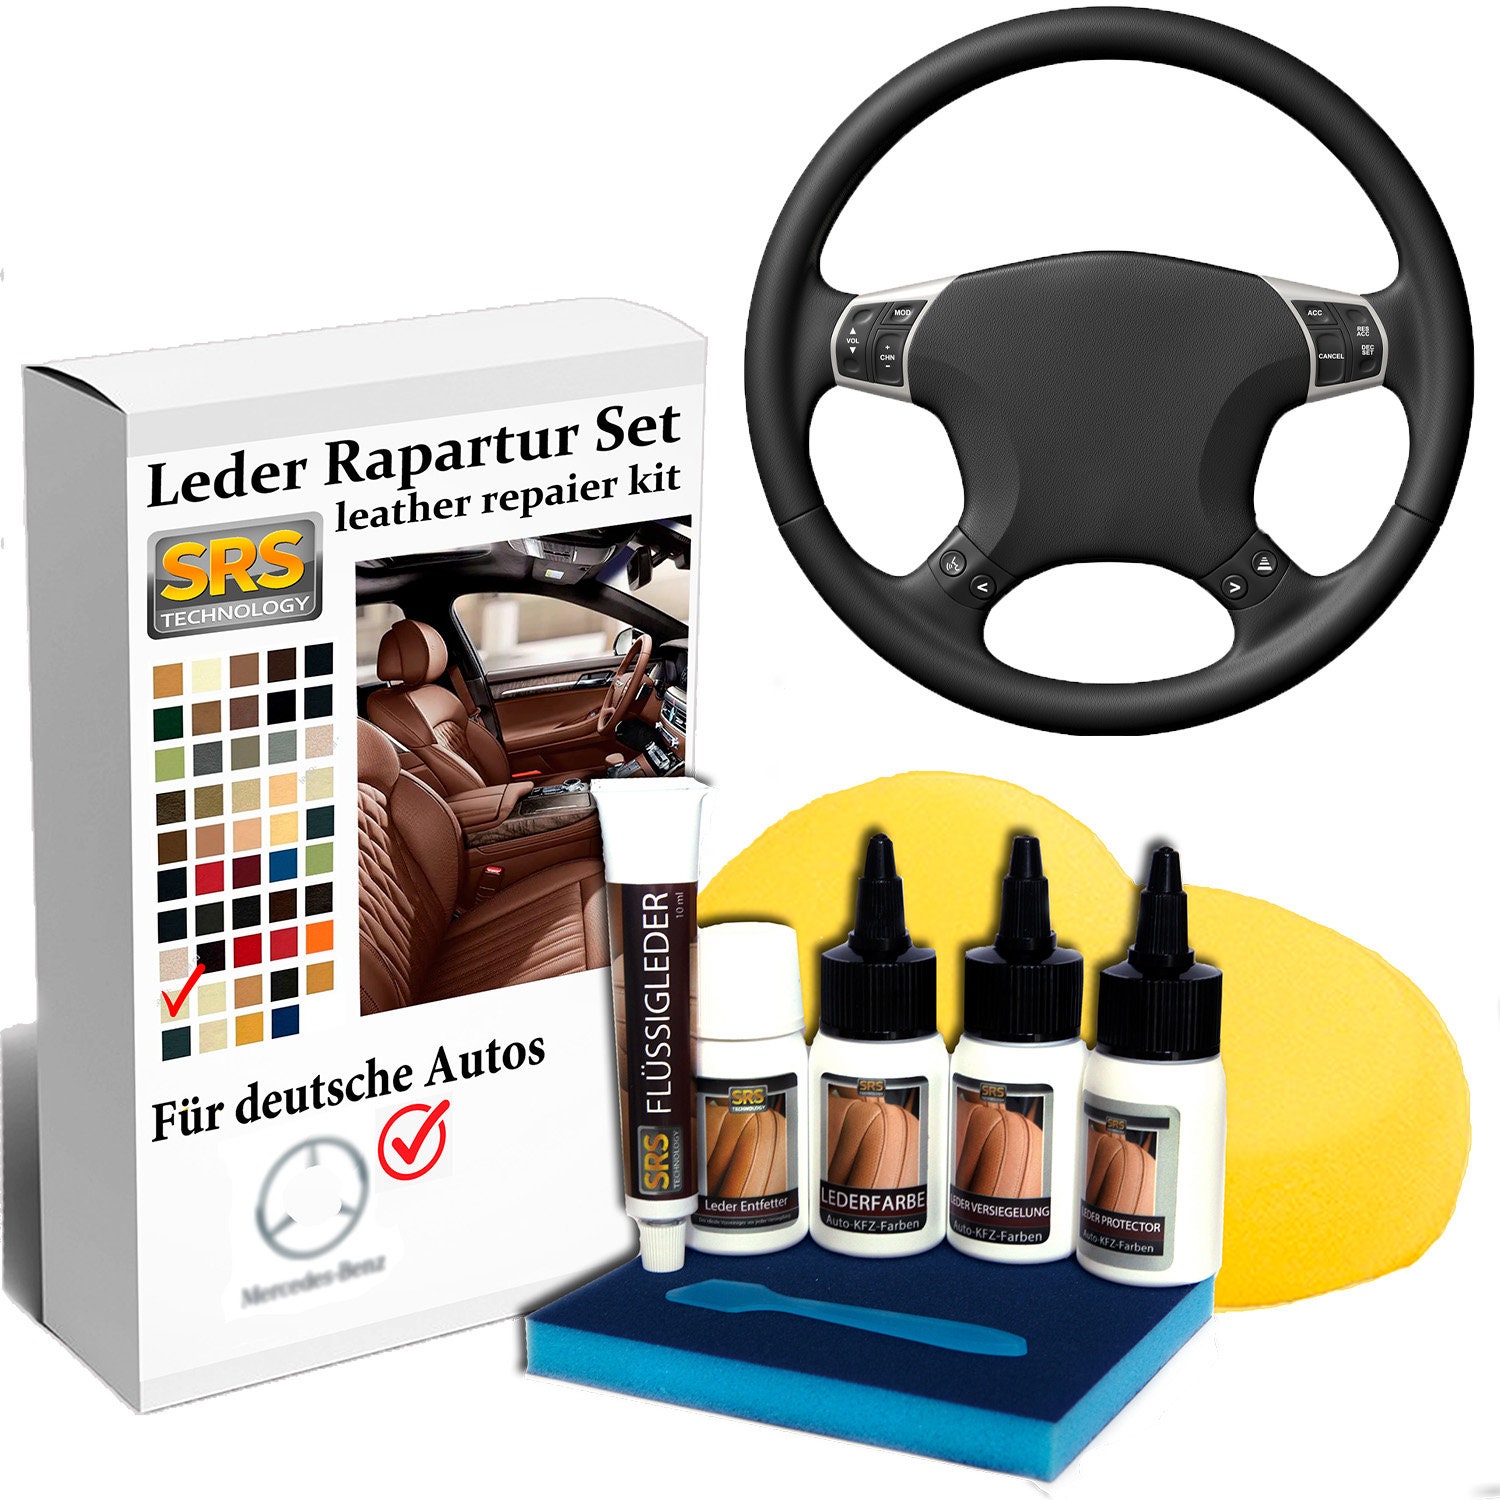 Leder reparatur Set für Lenkrad. BMW, Audi, Mercedes, schwarz. Lederfarbe.  Kit leather repair. Steering wheel repair. Leather color black. - .de